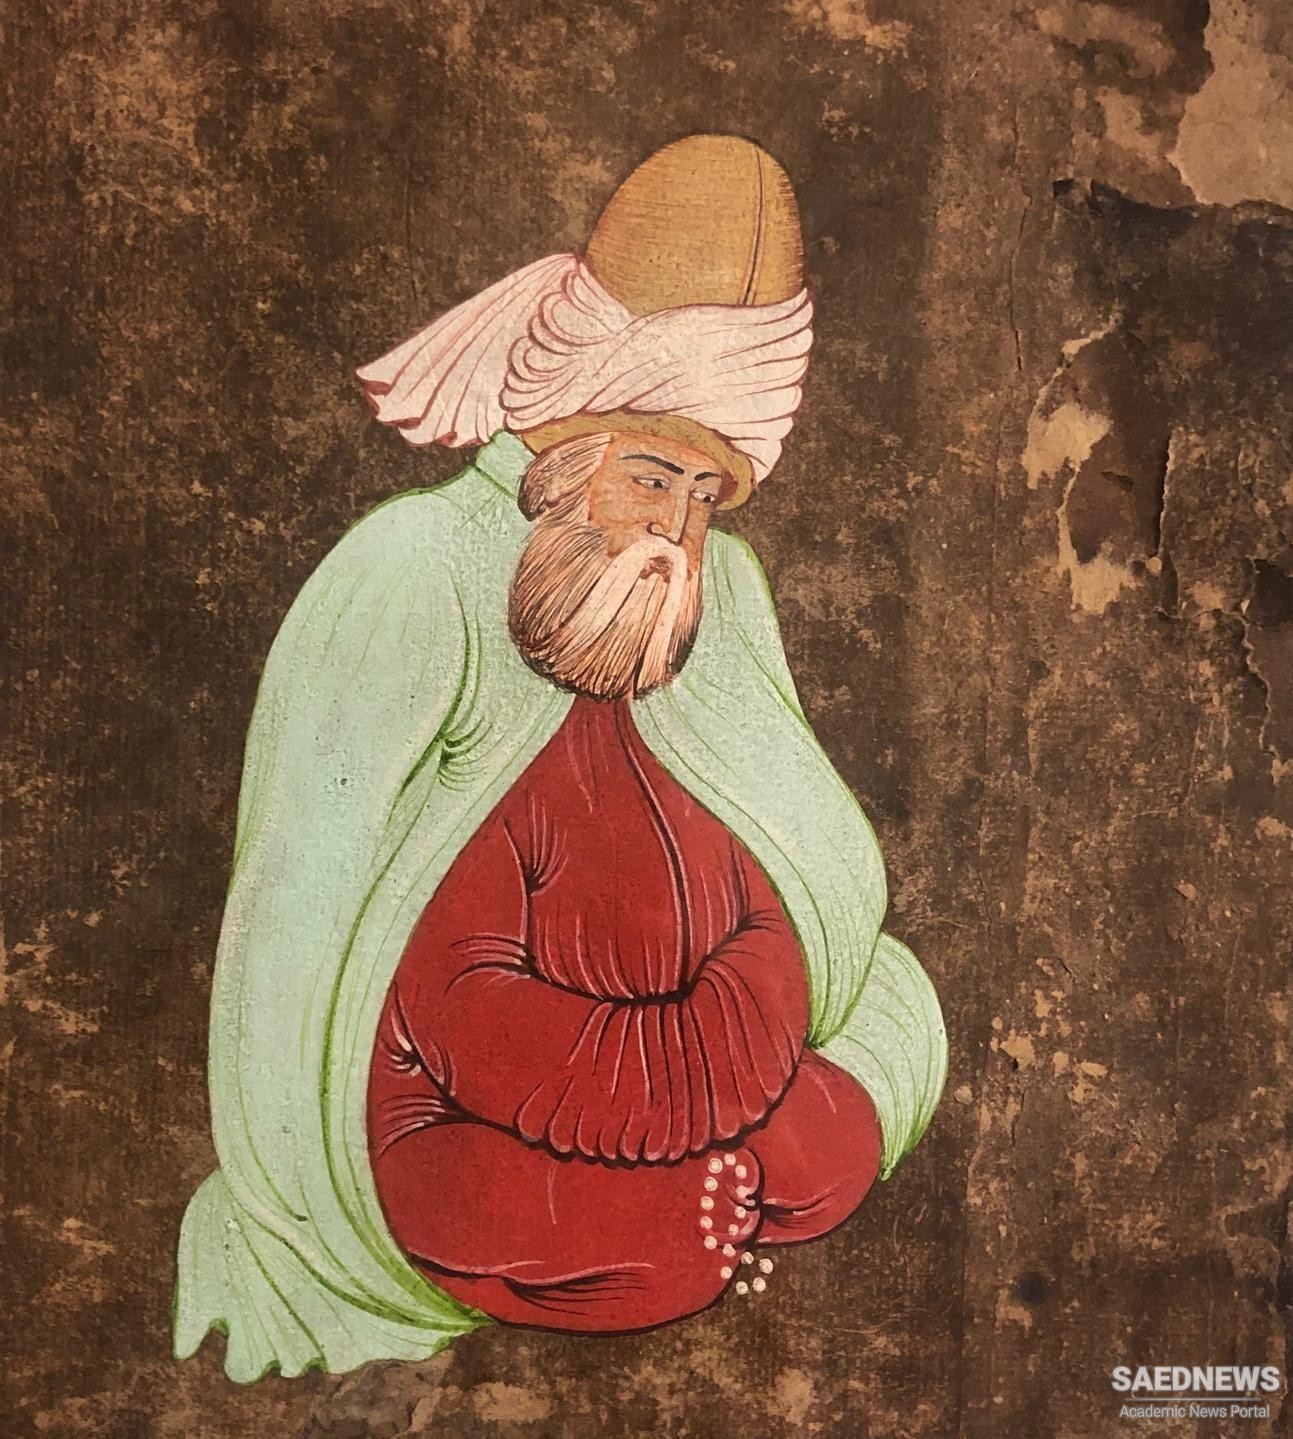 Jallal-ed-din Mohammad Rumi Better Known as Maulana Rumi